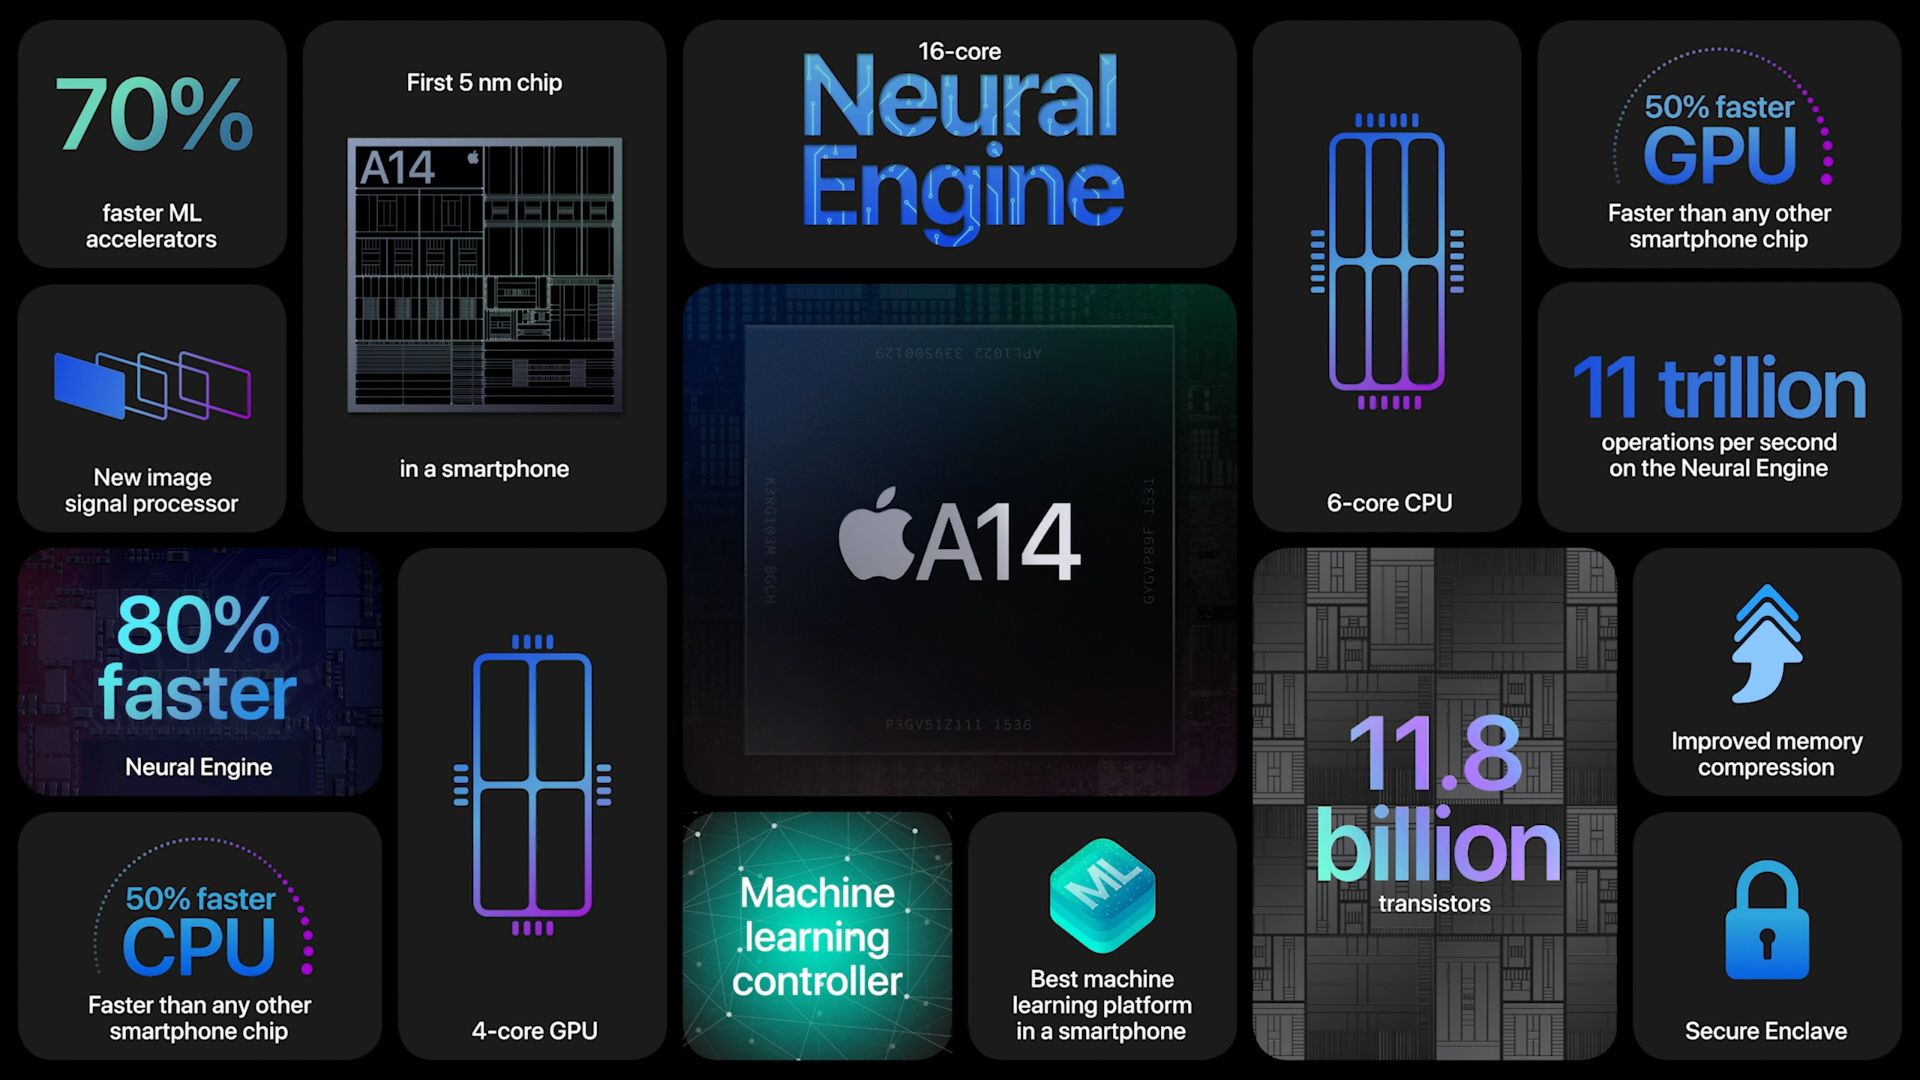 Apple's A14 chipset